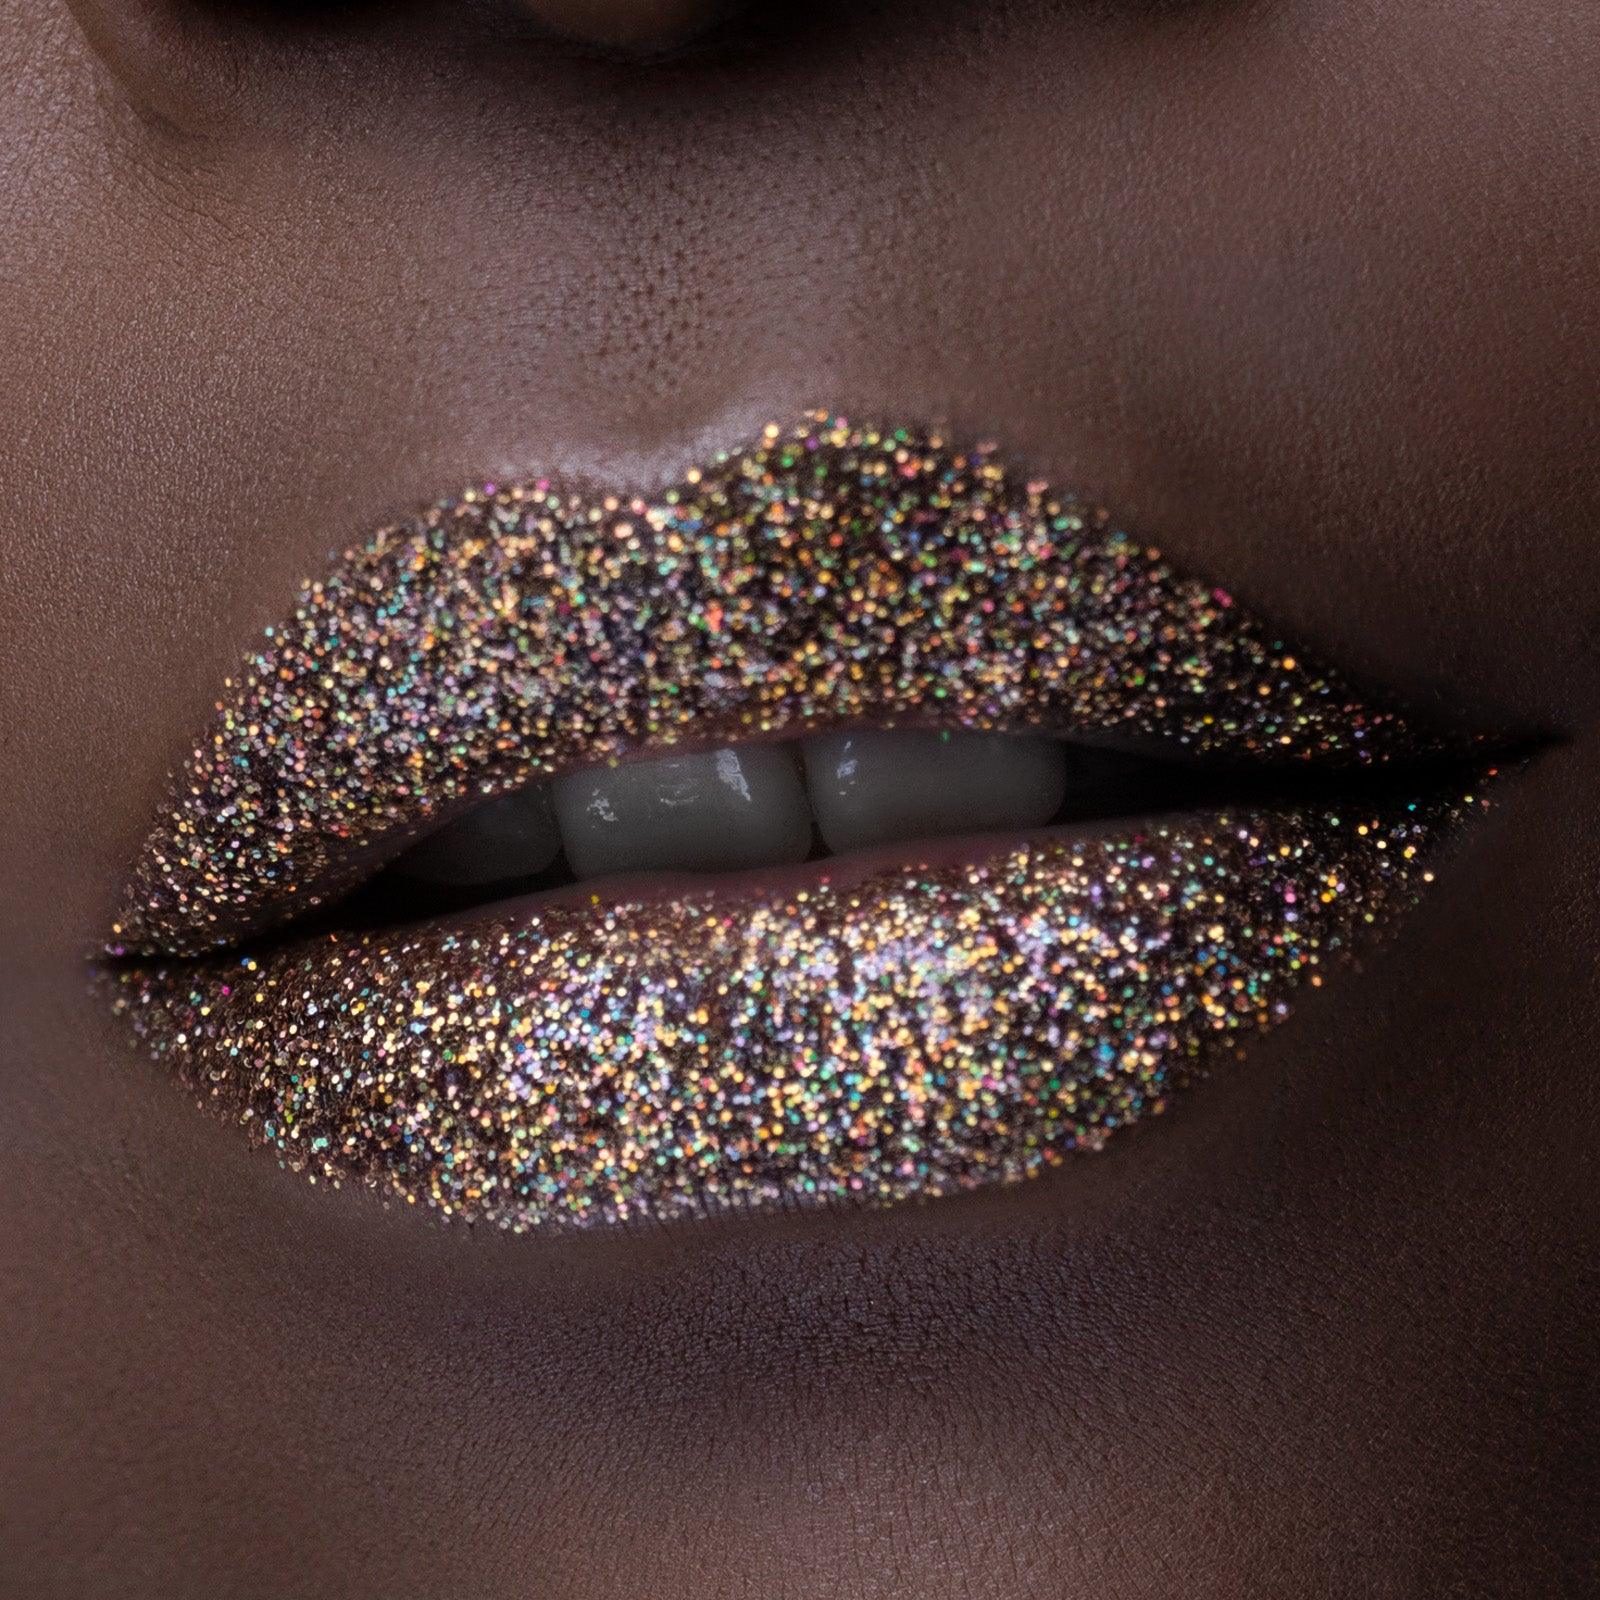 Peachy Glitter Lip Kit - Smudge & Kiss Proof - Stay Golden Cosmetics